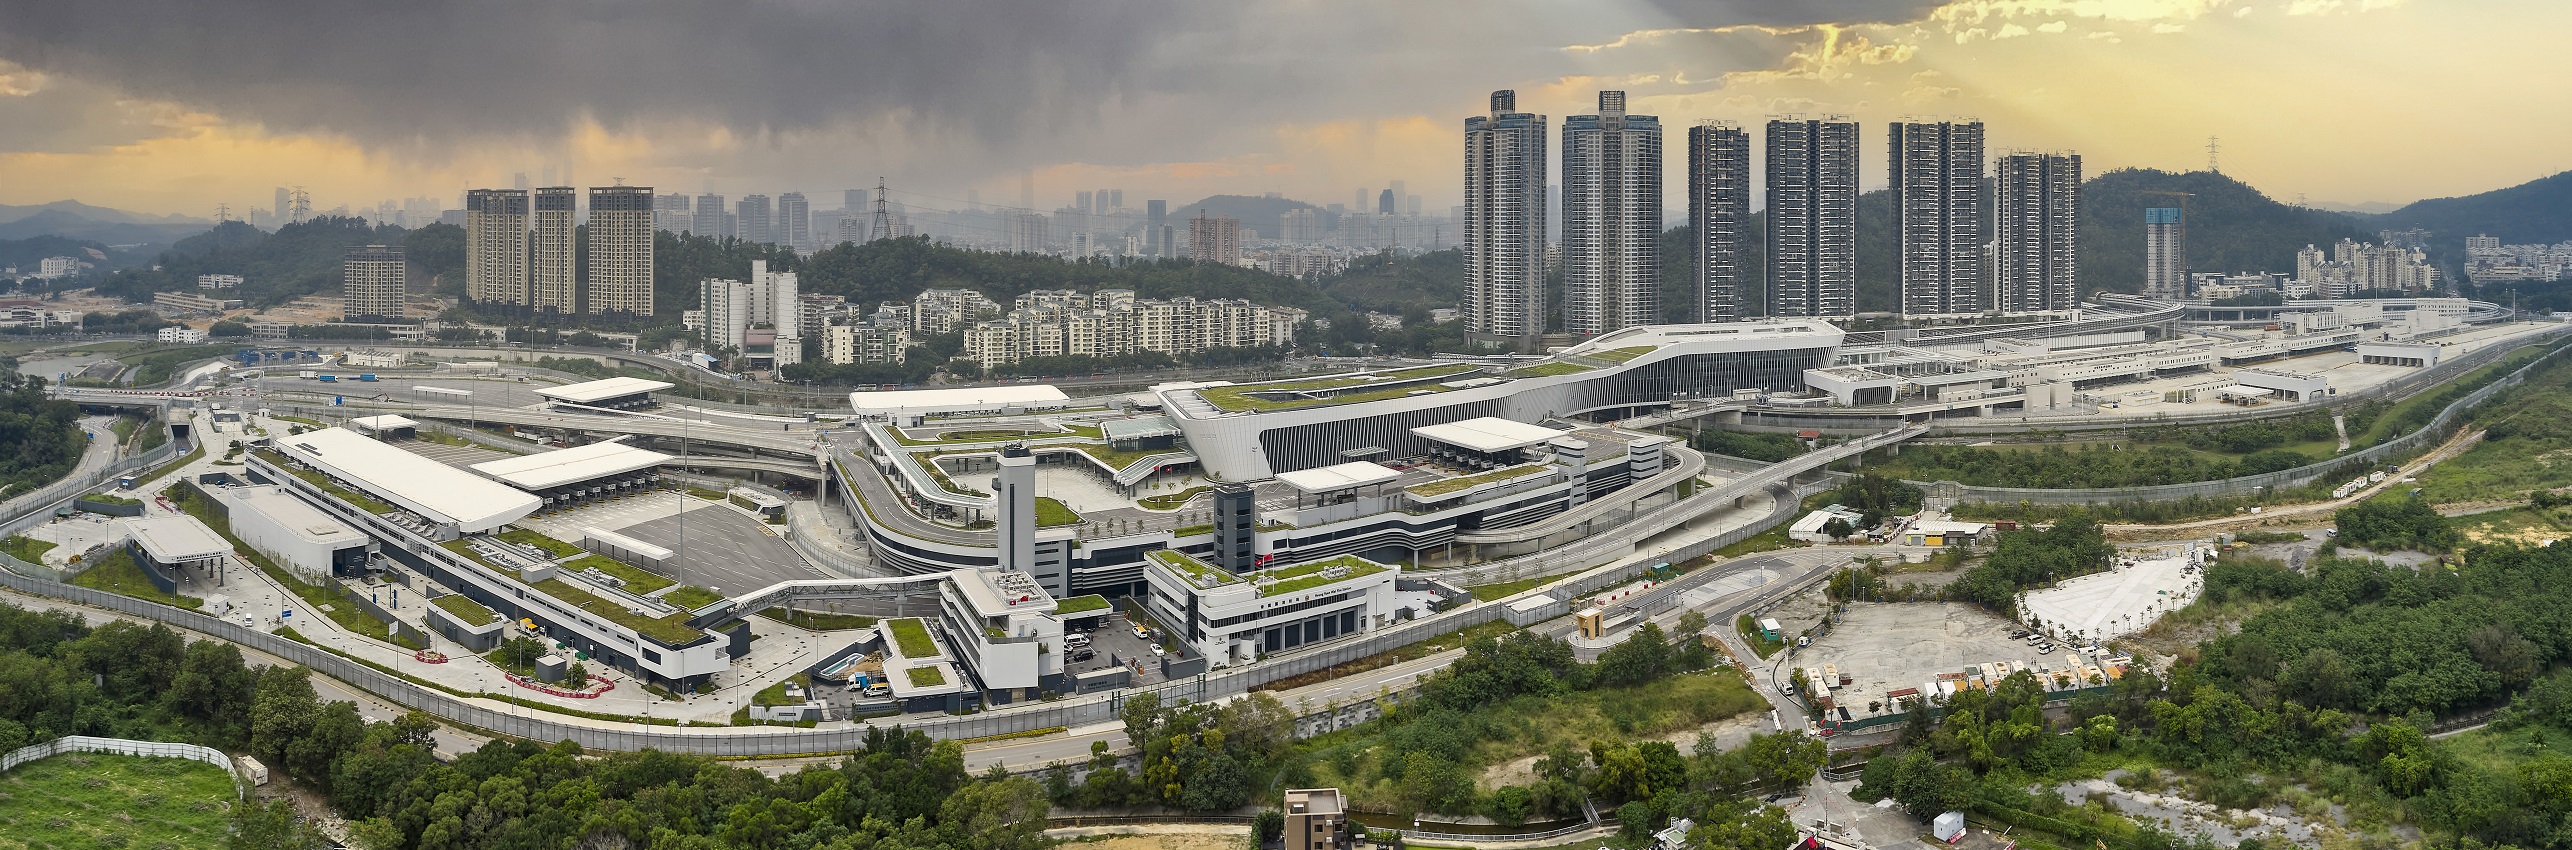 Extensión de la Terminal 1 del aeropuerto de Hong Kong. ACS